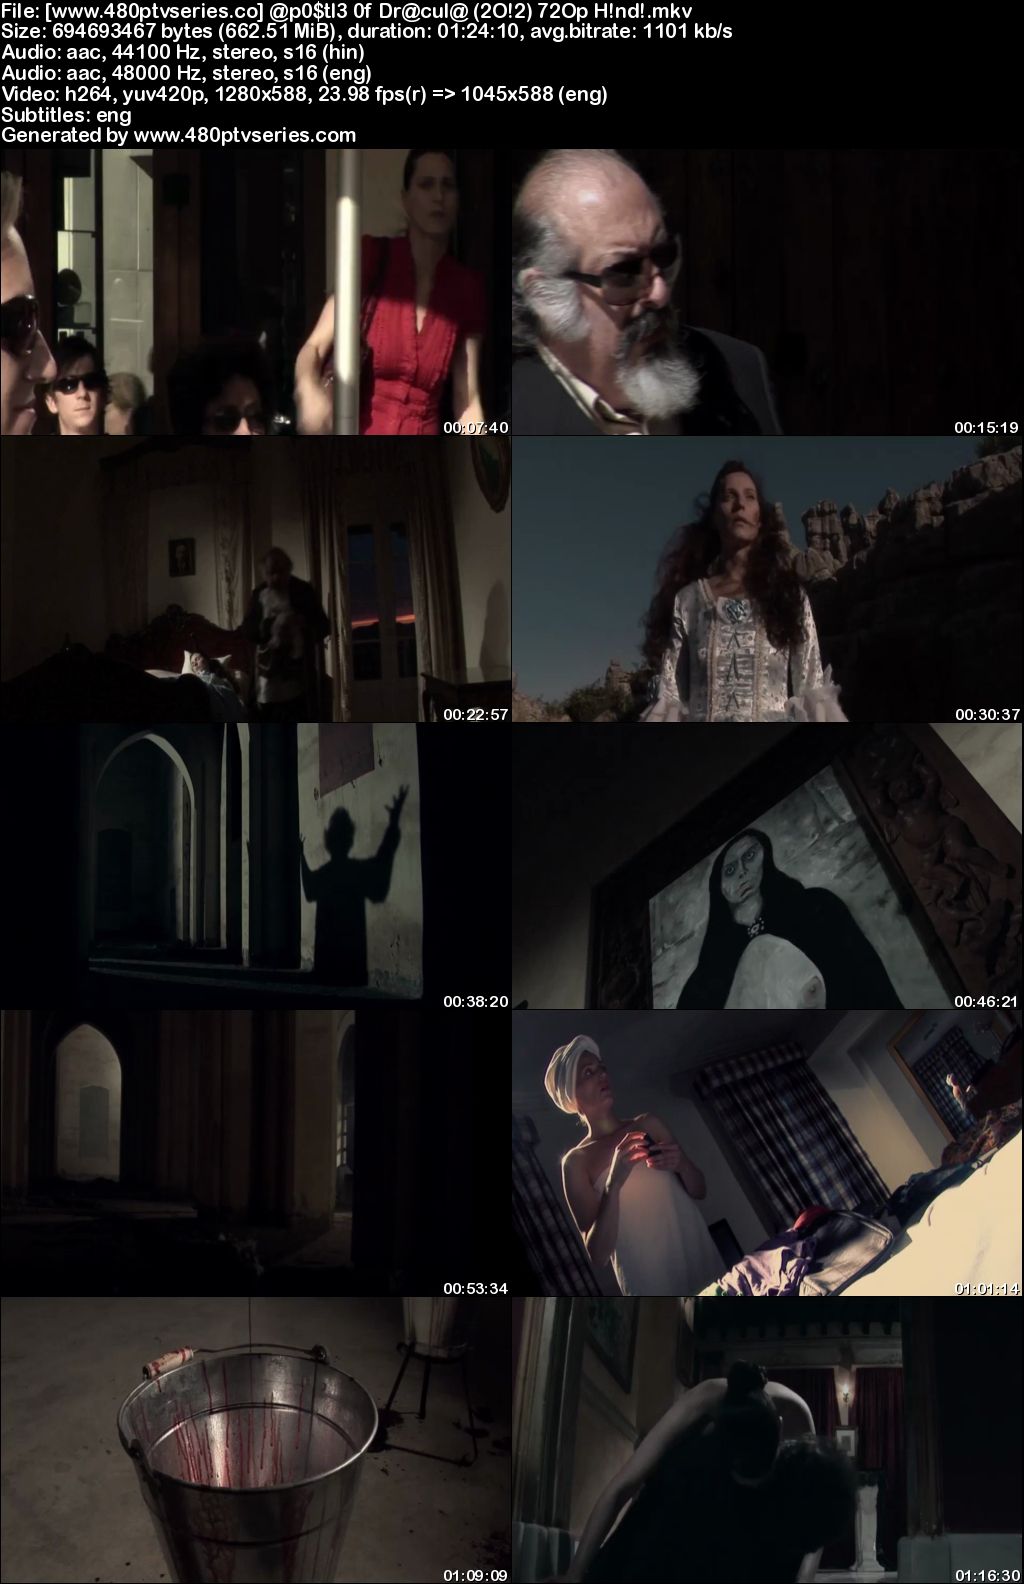 Watch Online Free Apostle of Dracula (2012) Full Hindi Dual Audio Movie Download 480p 720p BluRay